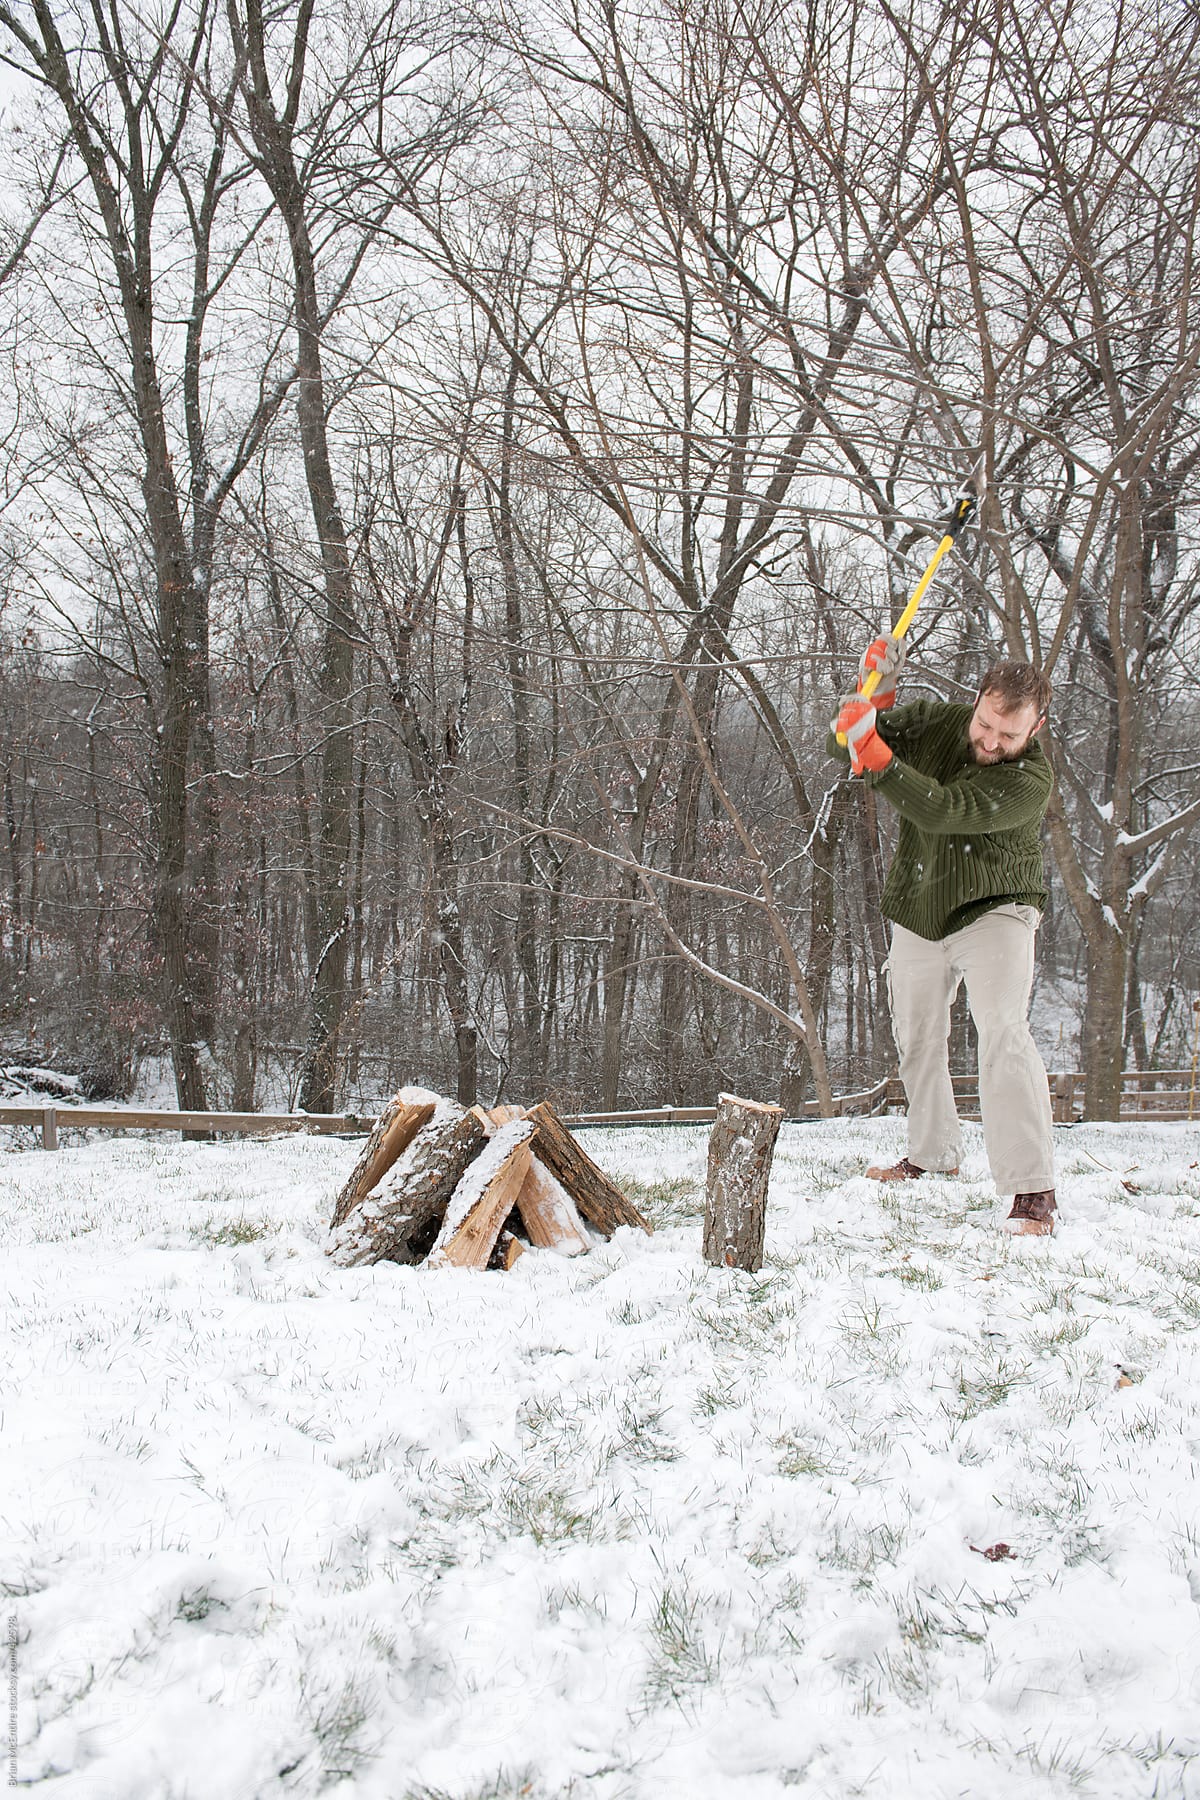 Splitting Firewood: Man Chops Wood For Fire As Snow Falls